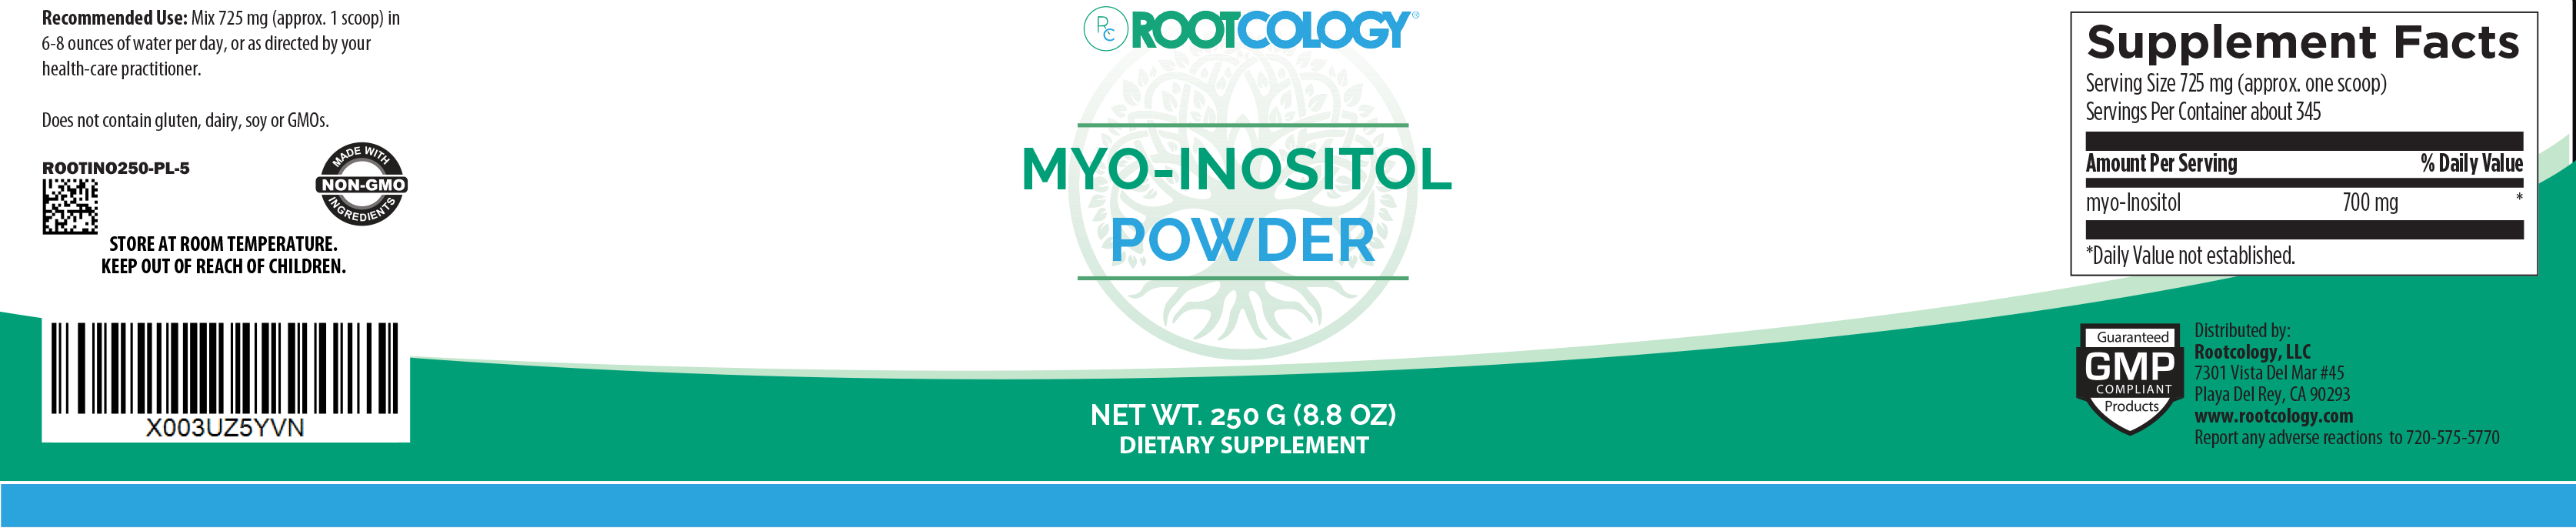 Rootcology Myo-Inositol Supplement Label